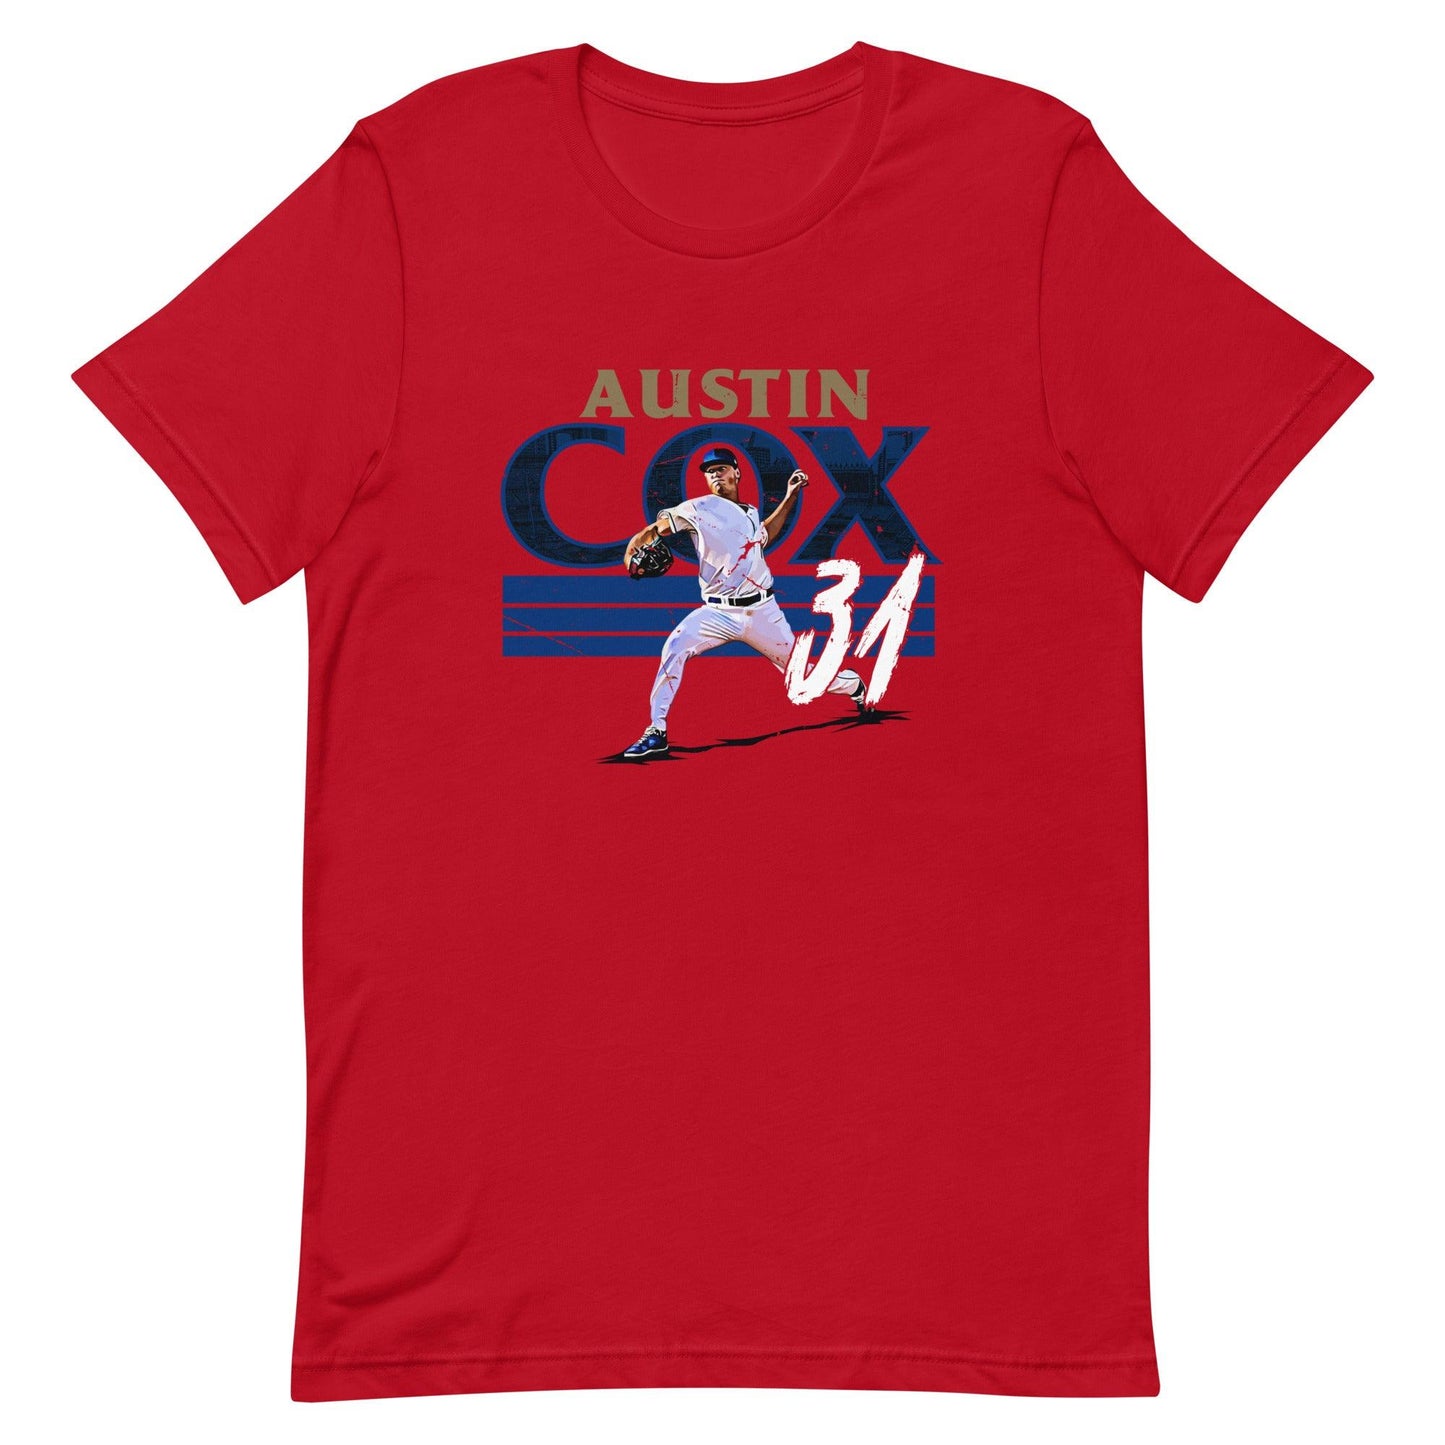 Austin Cox "Strike" t-shirt - Fan Arch